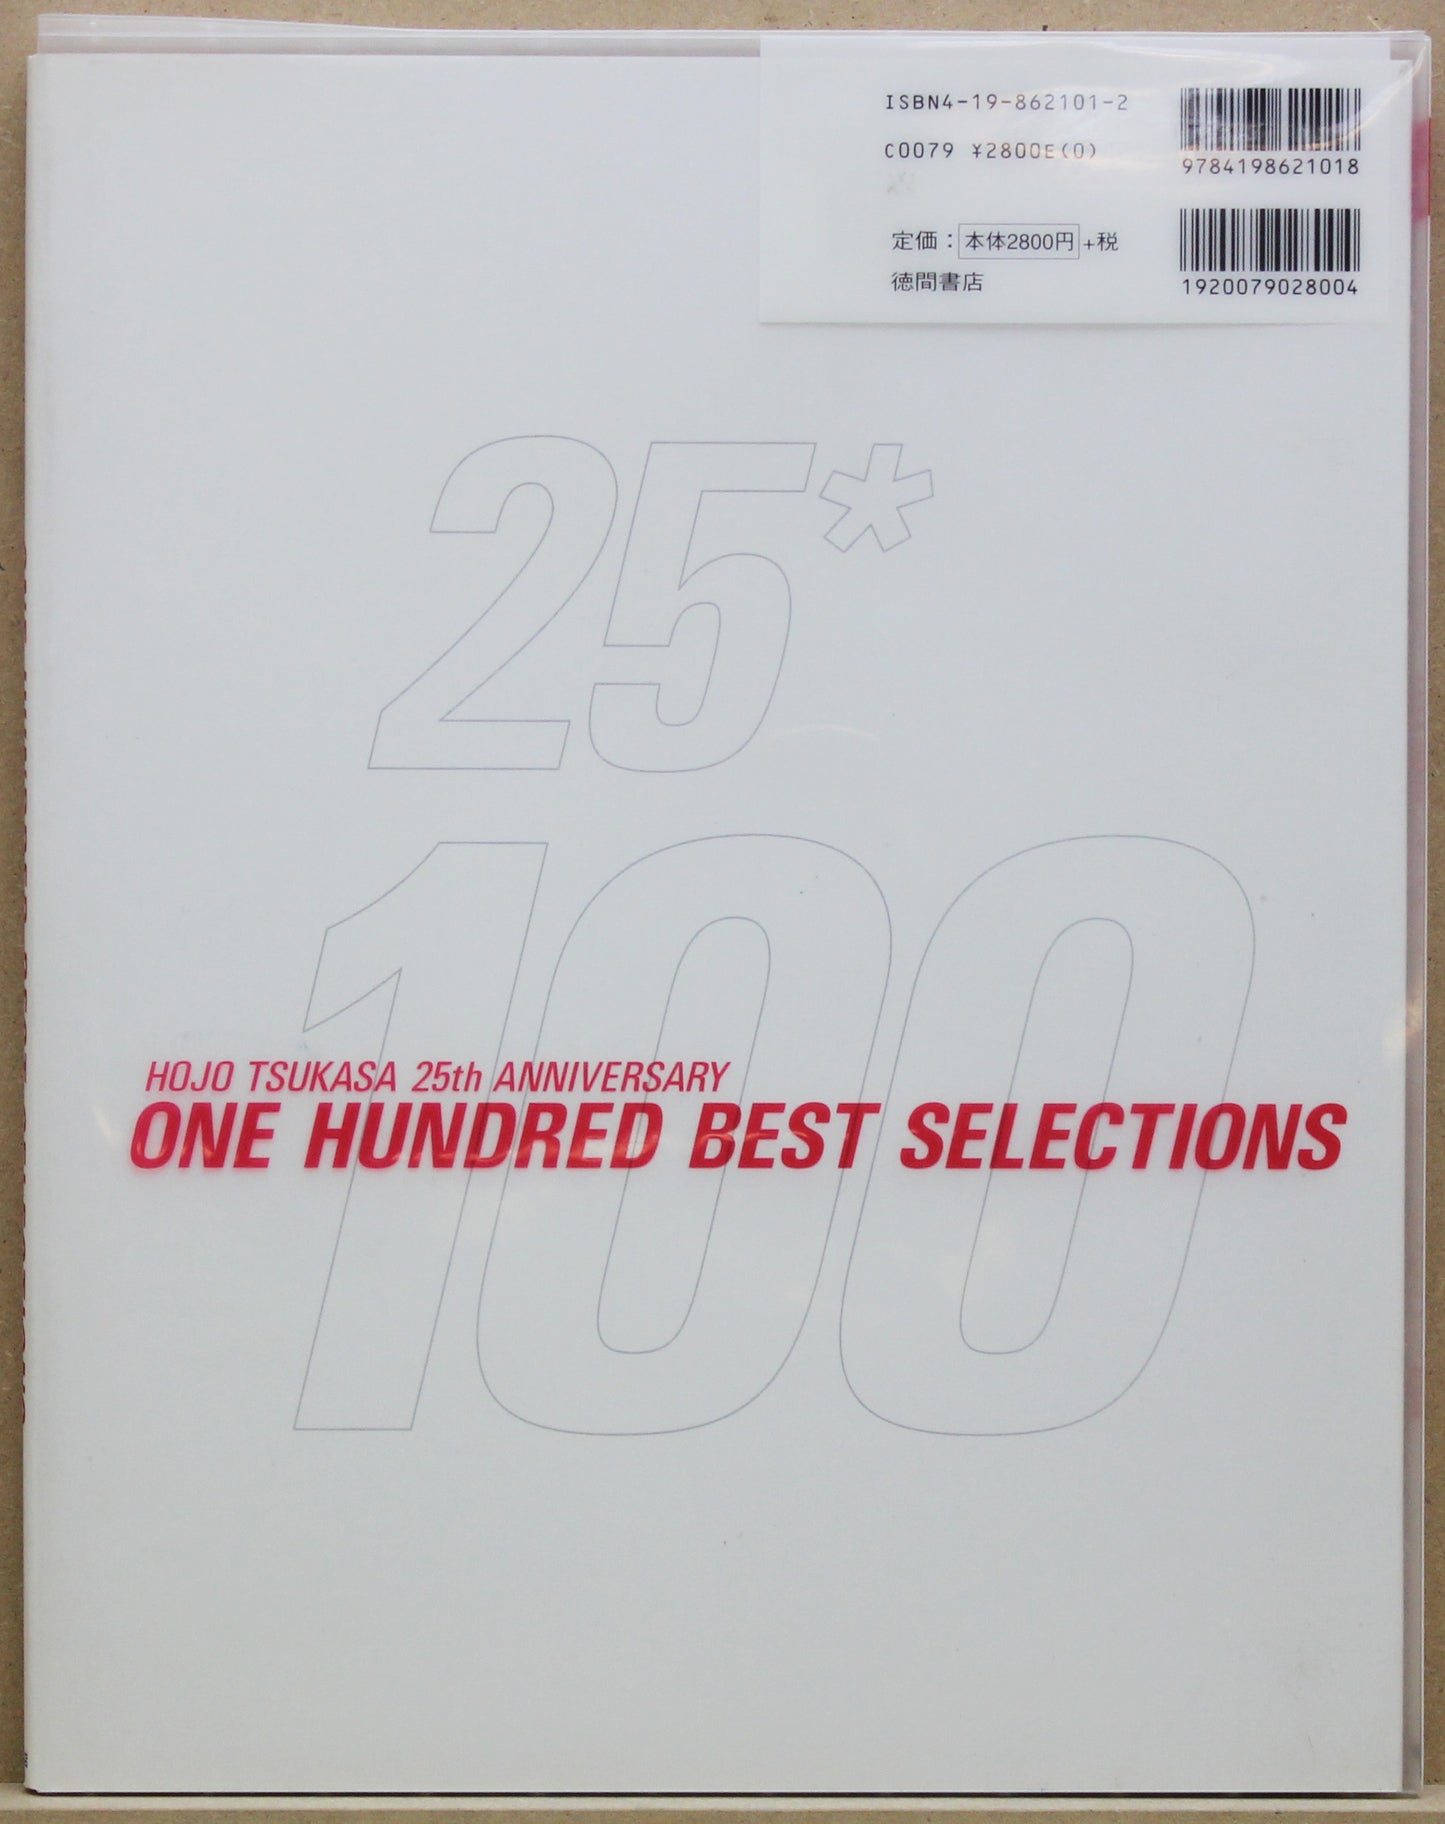 Hojo Tsukasa 25th Anniversary One hundred best selections Artbook